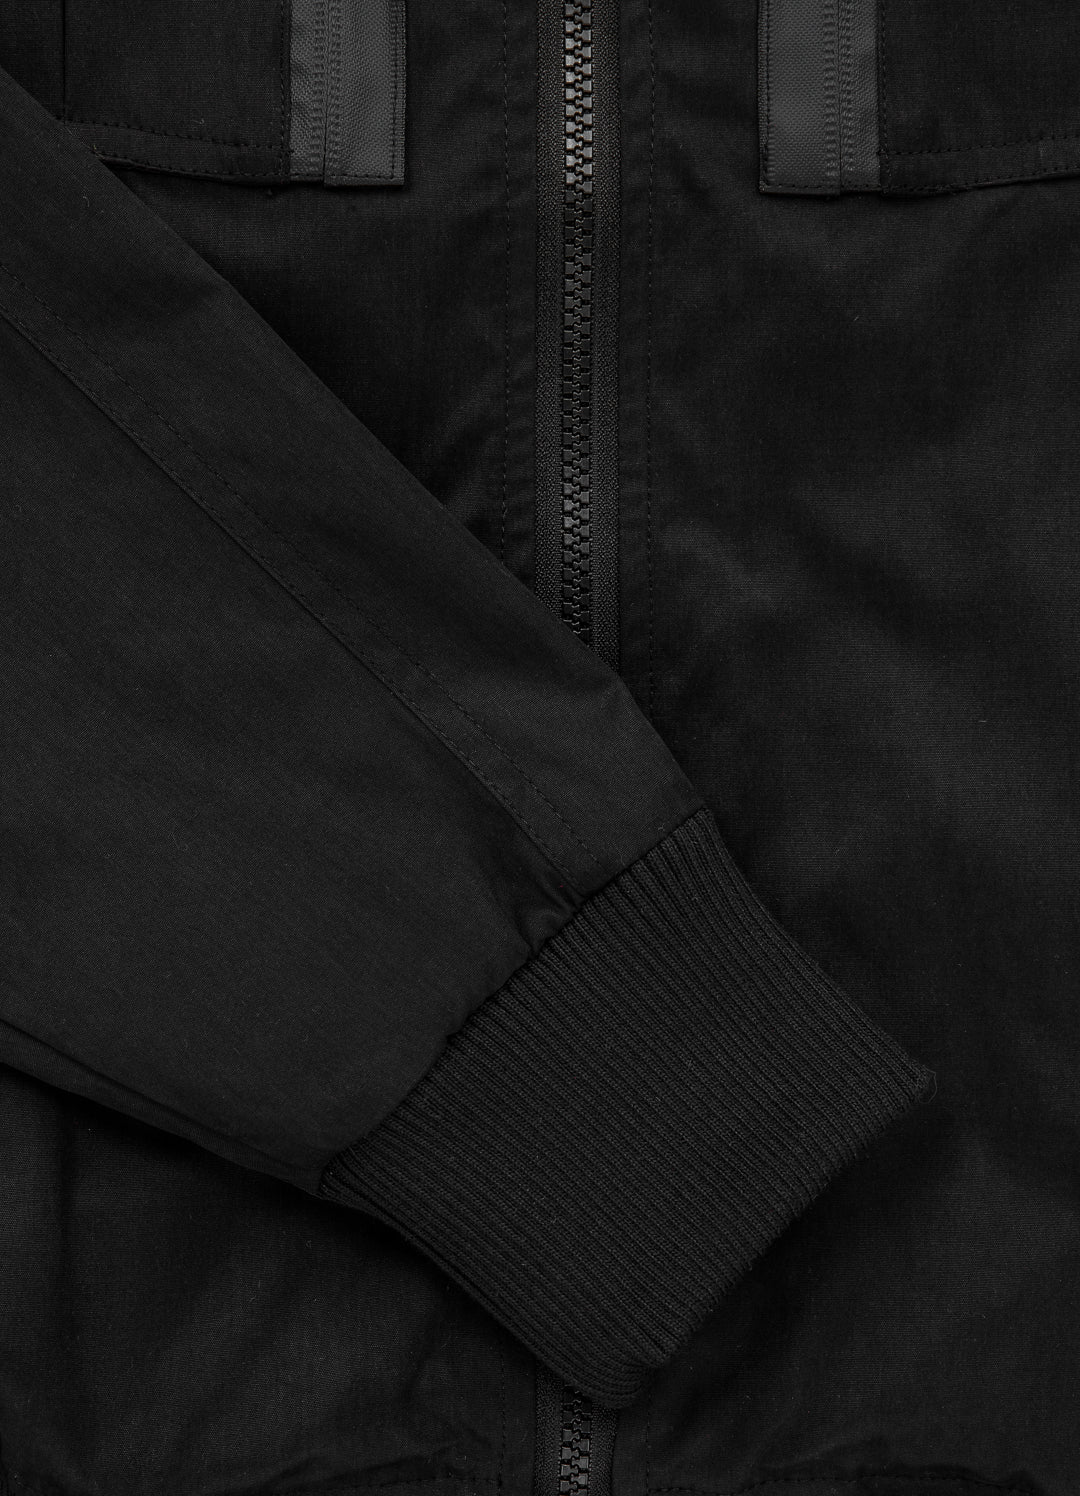 ARILLO Black Hooded Jacket.